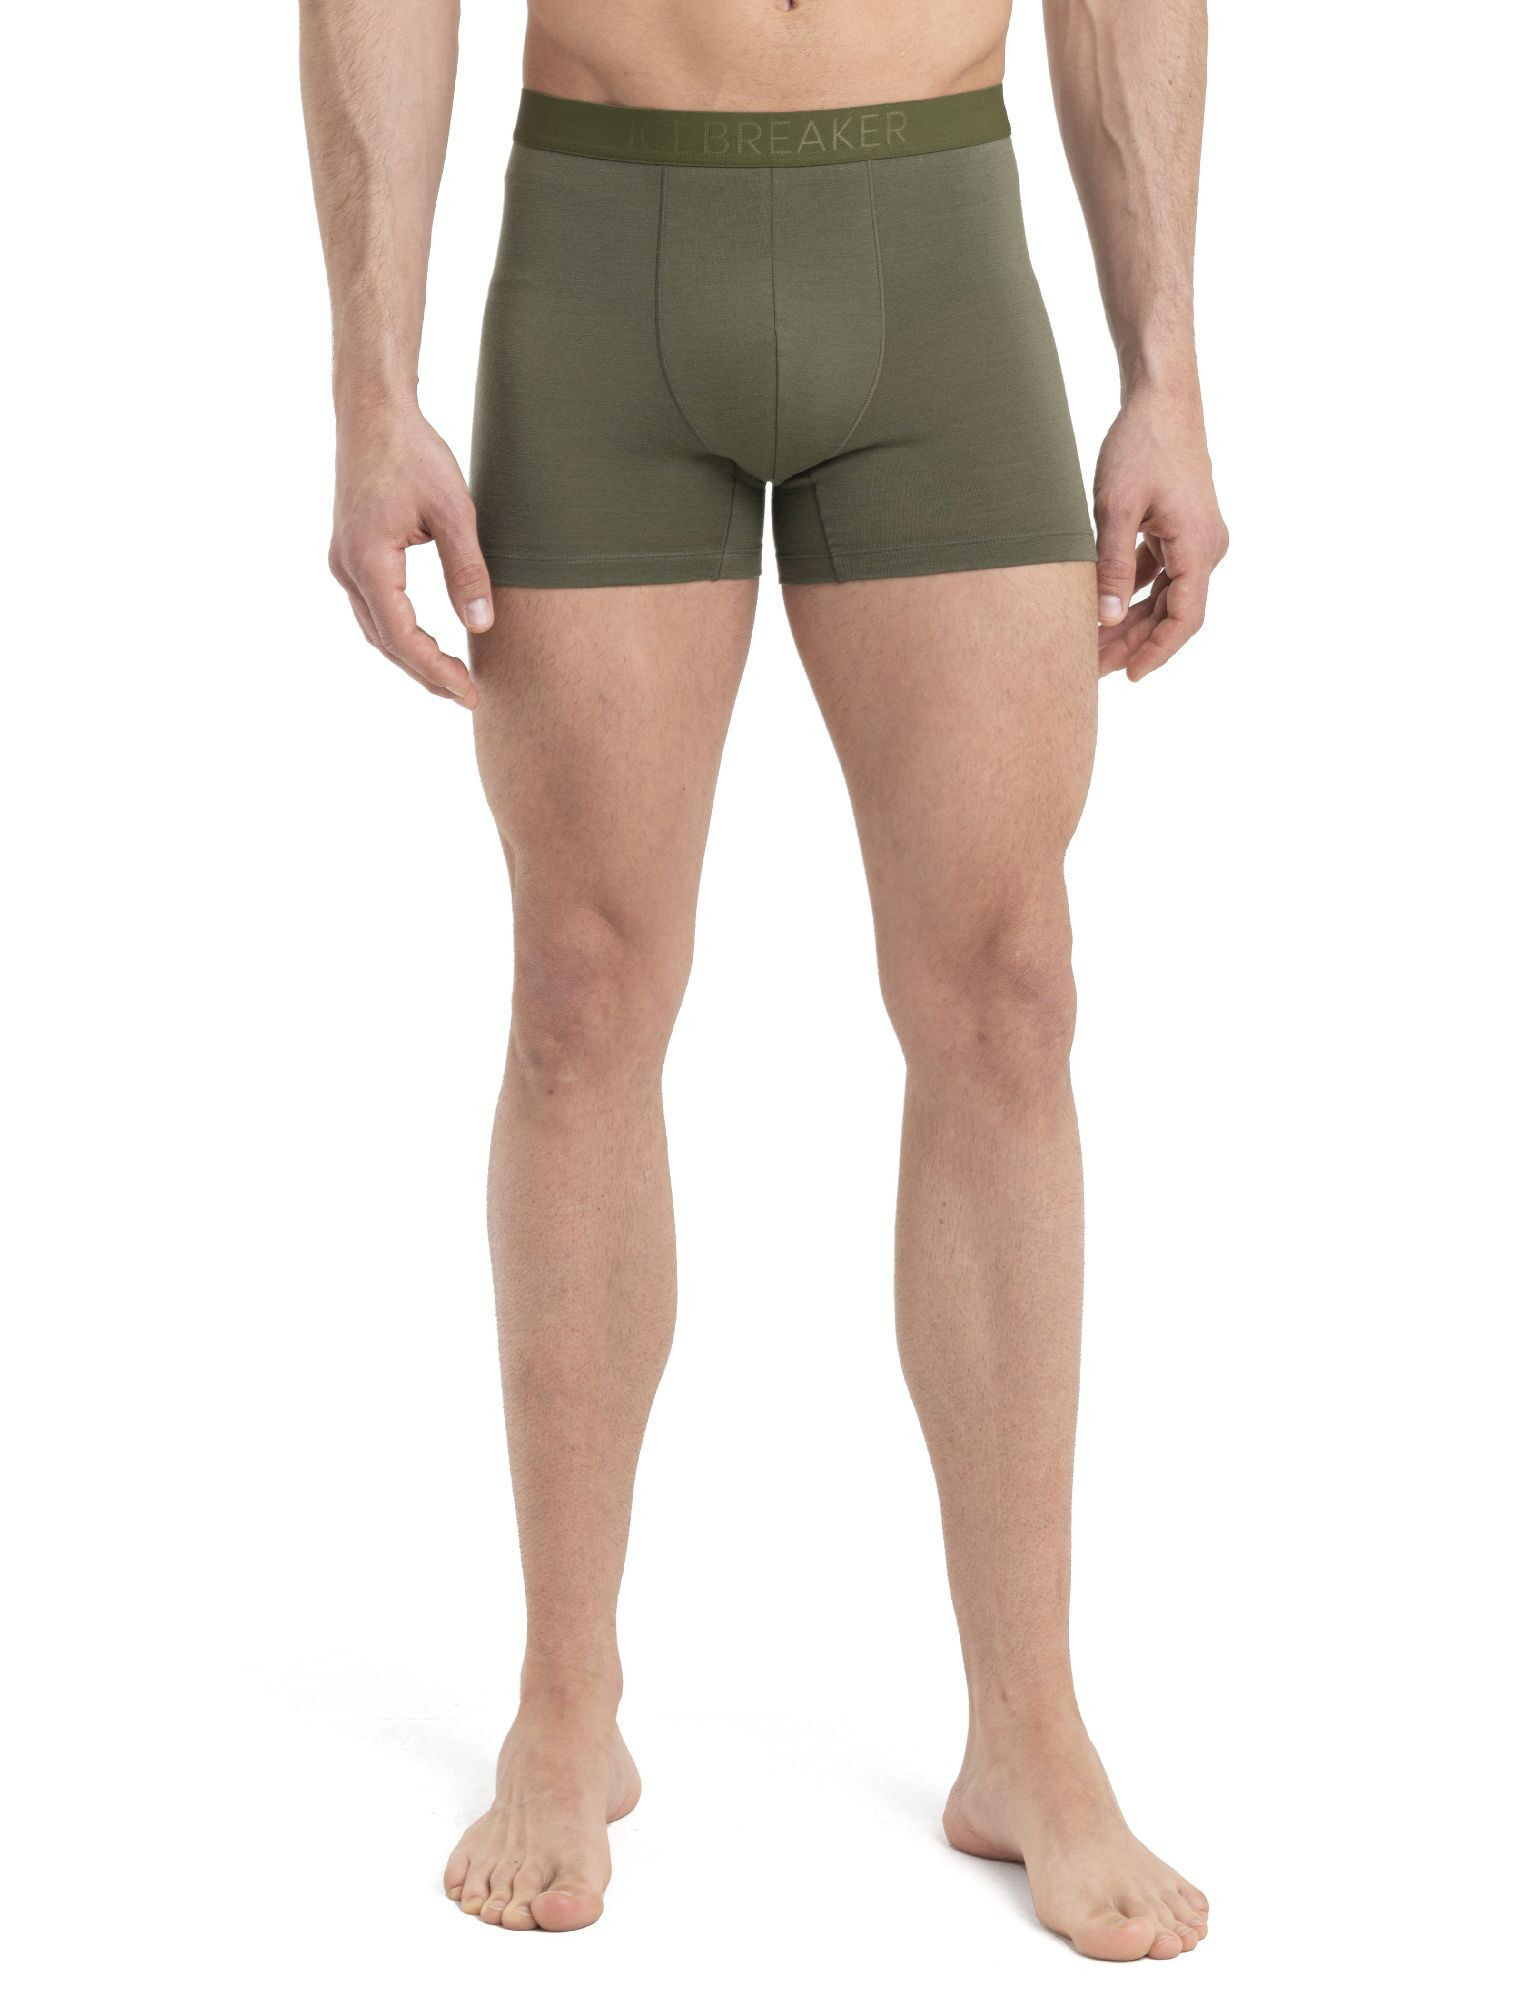 Icebreaker Anatomica Cool-Lite Boxers - Underwear - Men's